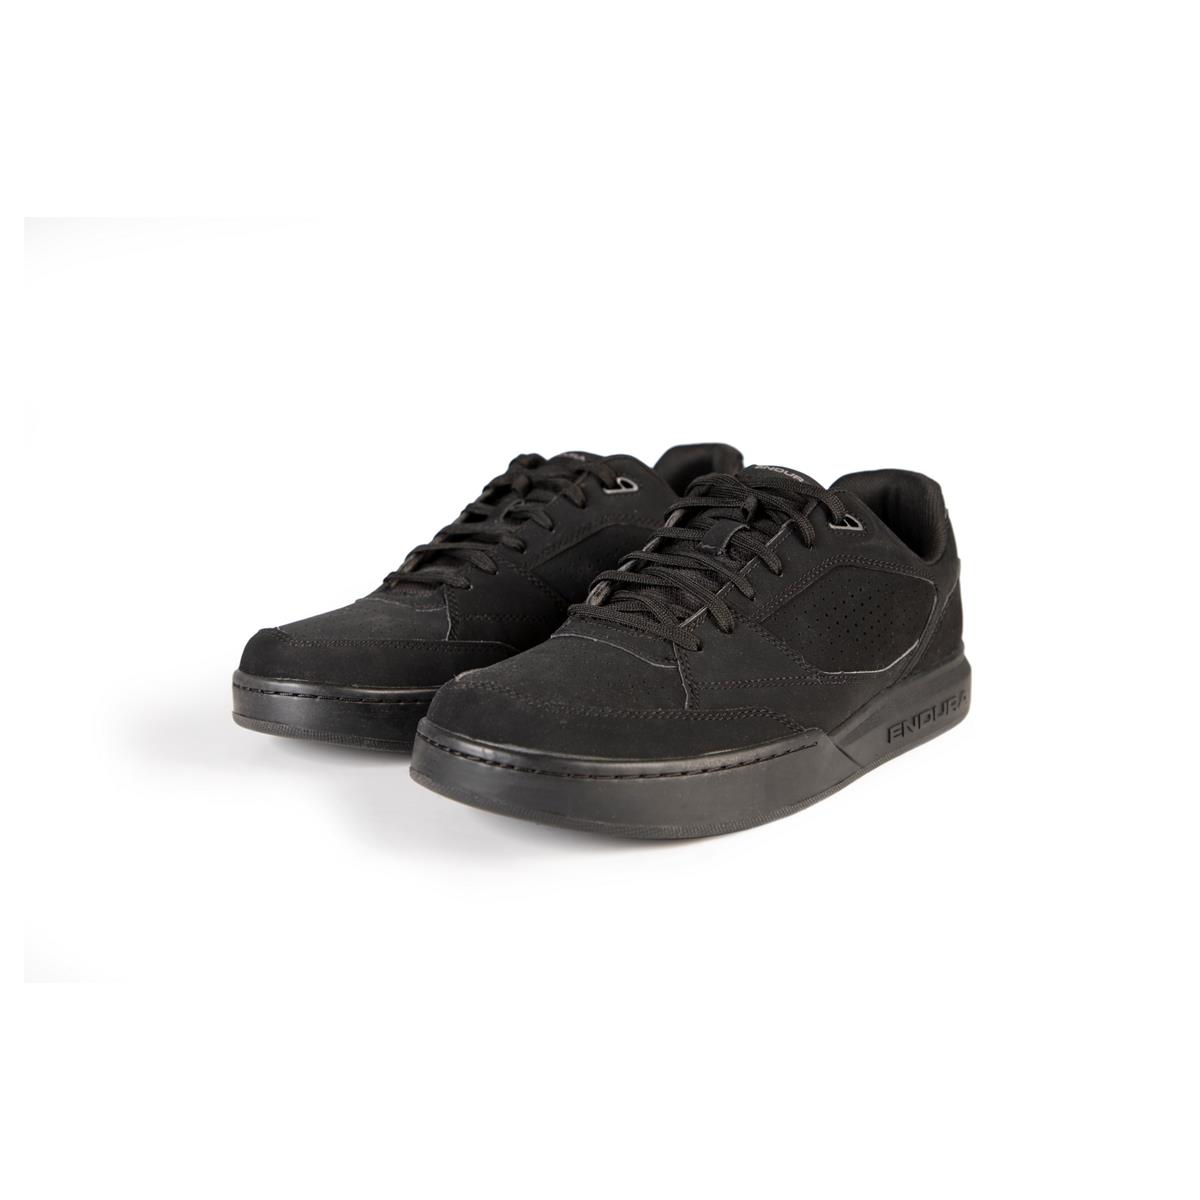 Hummvee Flat Pedal Shoes Black Size 47